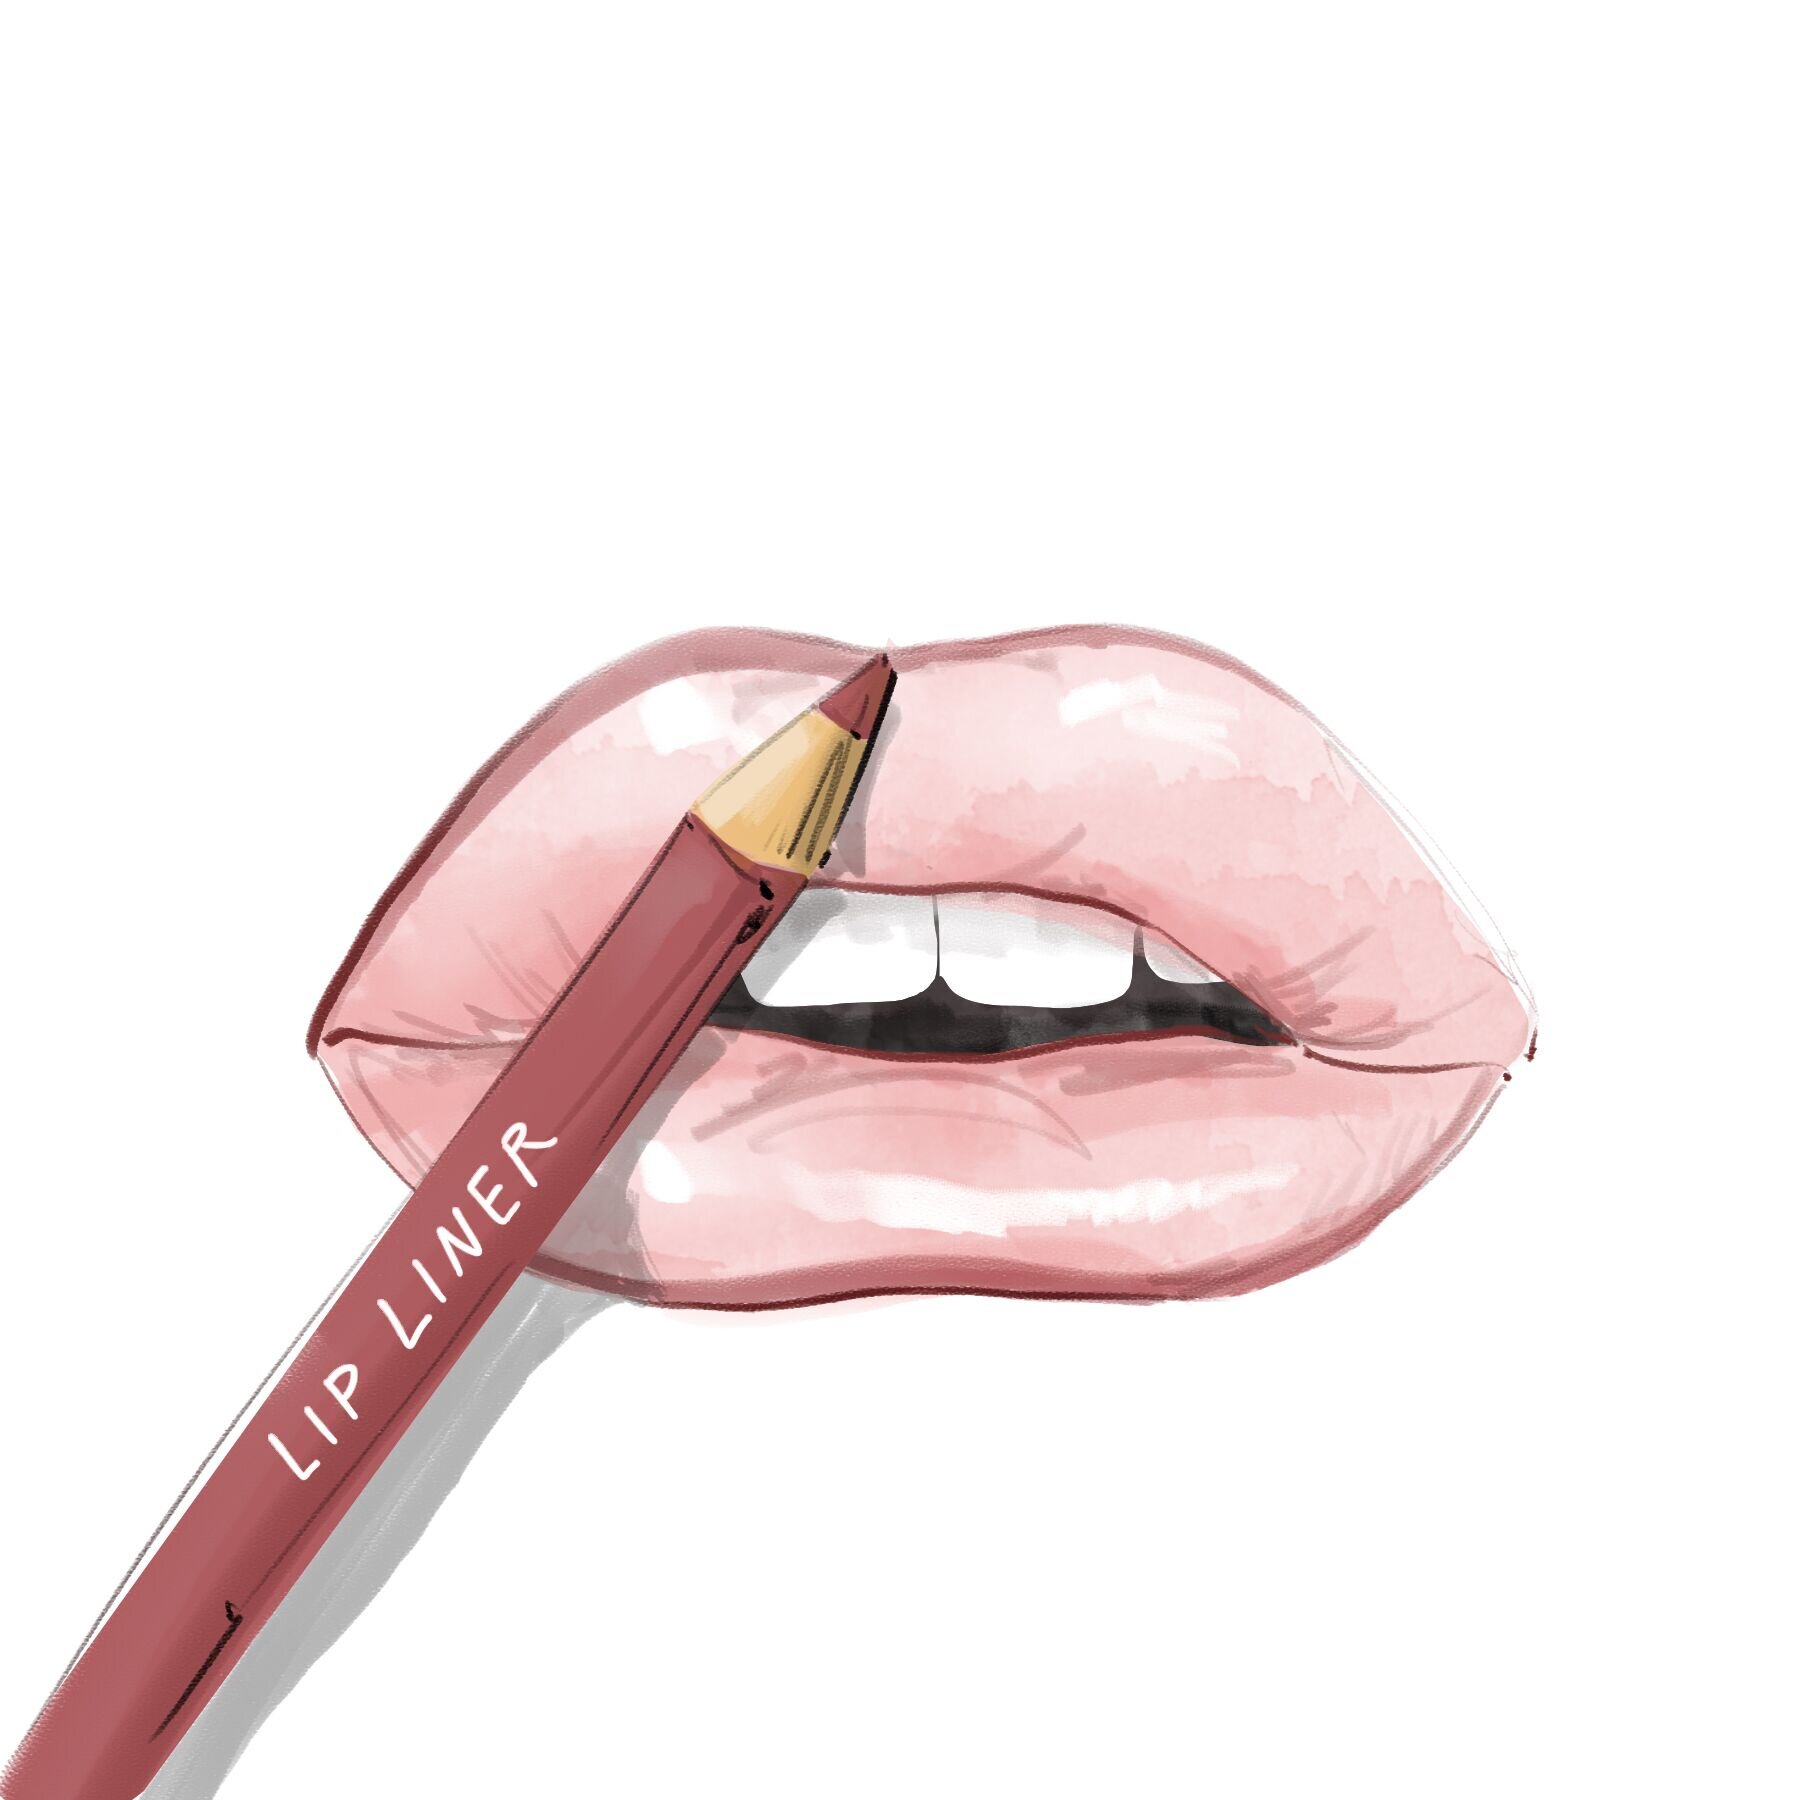 lip-illustration-beauty-makeup-amberday.jpg